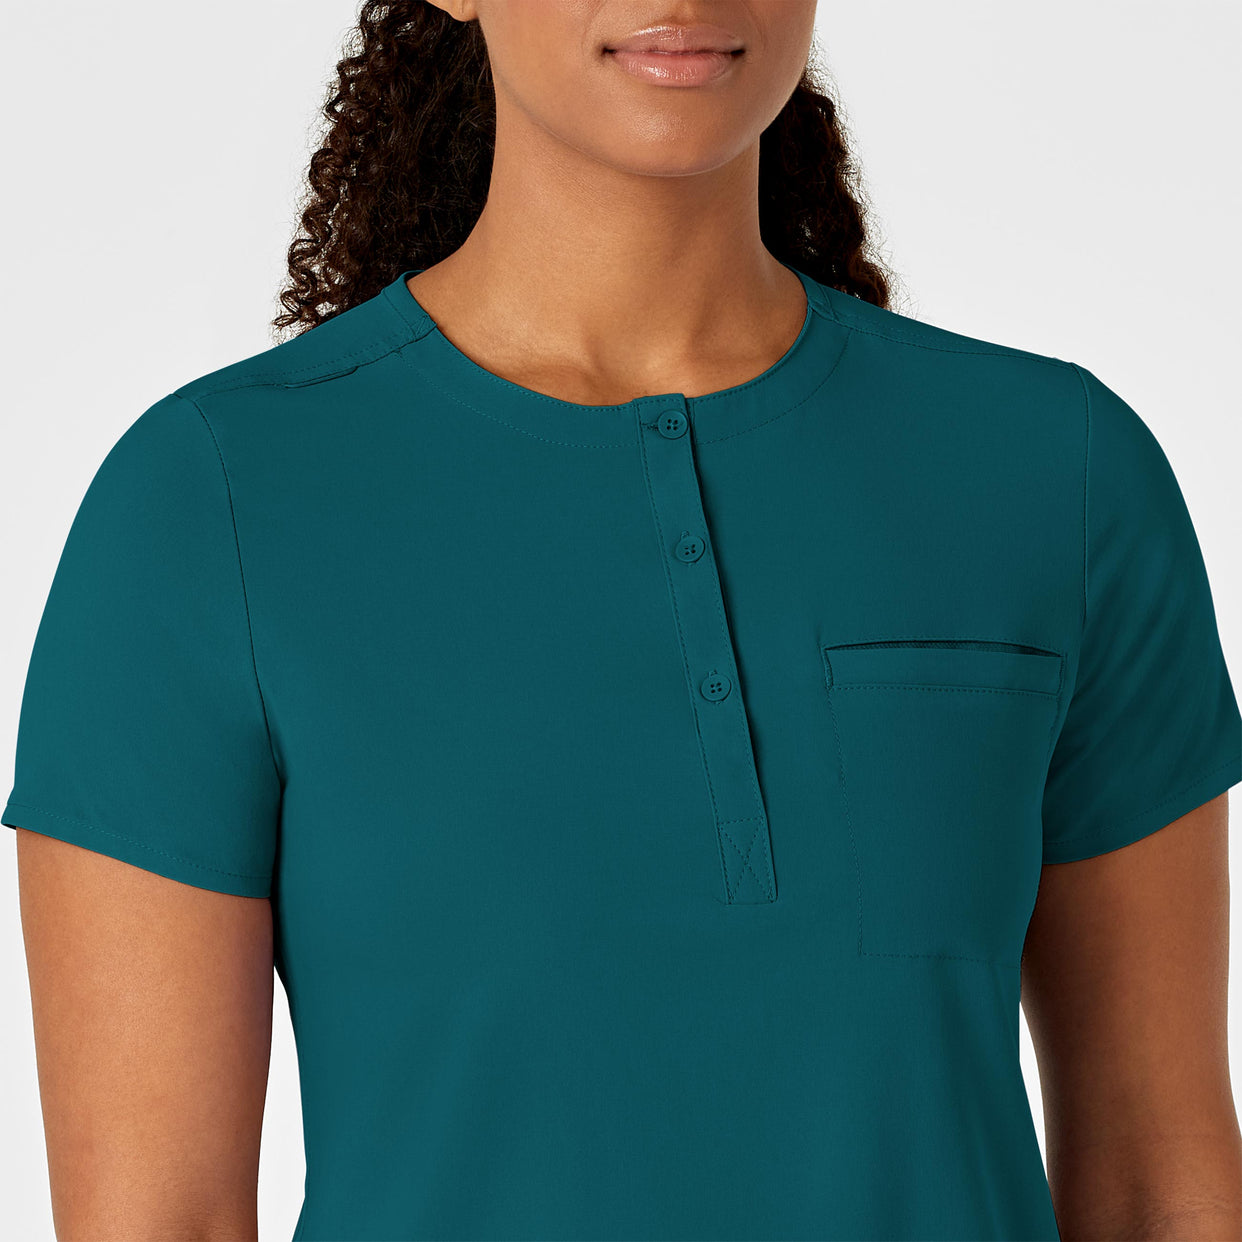 RENEW Women's Mandarin Collar Tuck-In Scrub Top Caribbean Blue side view